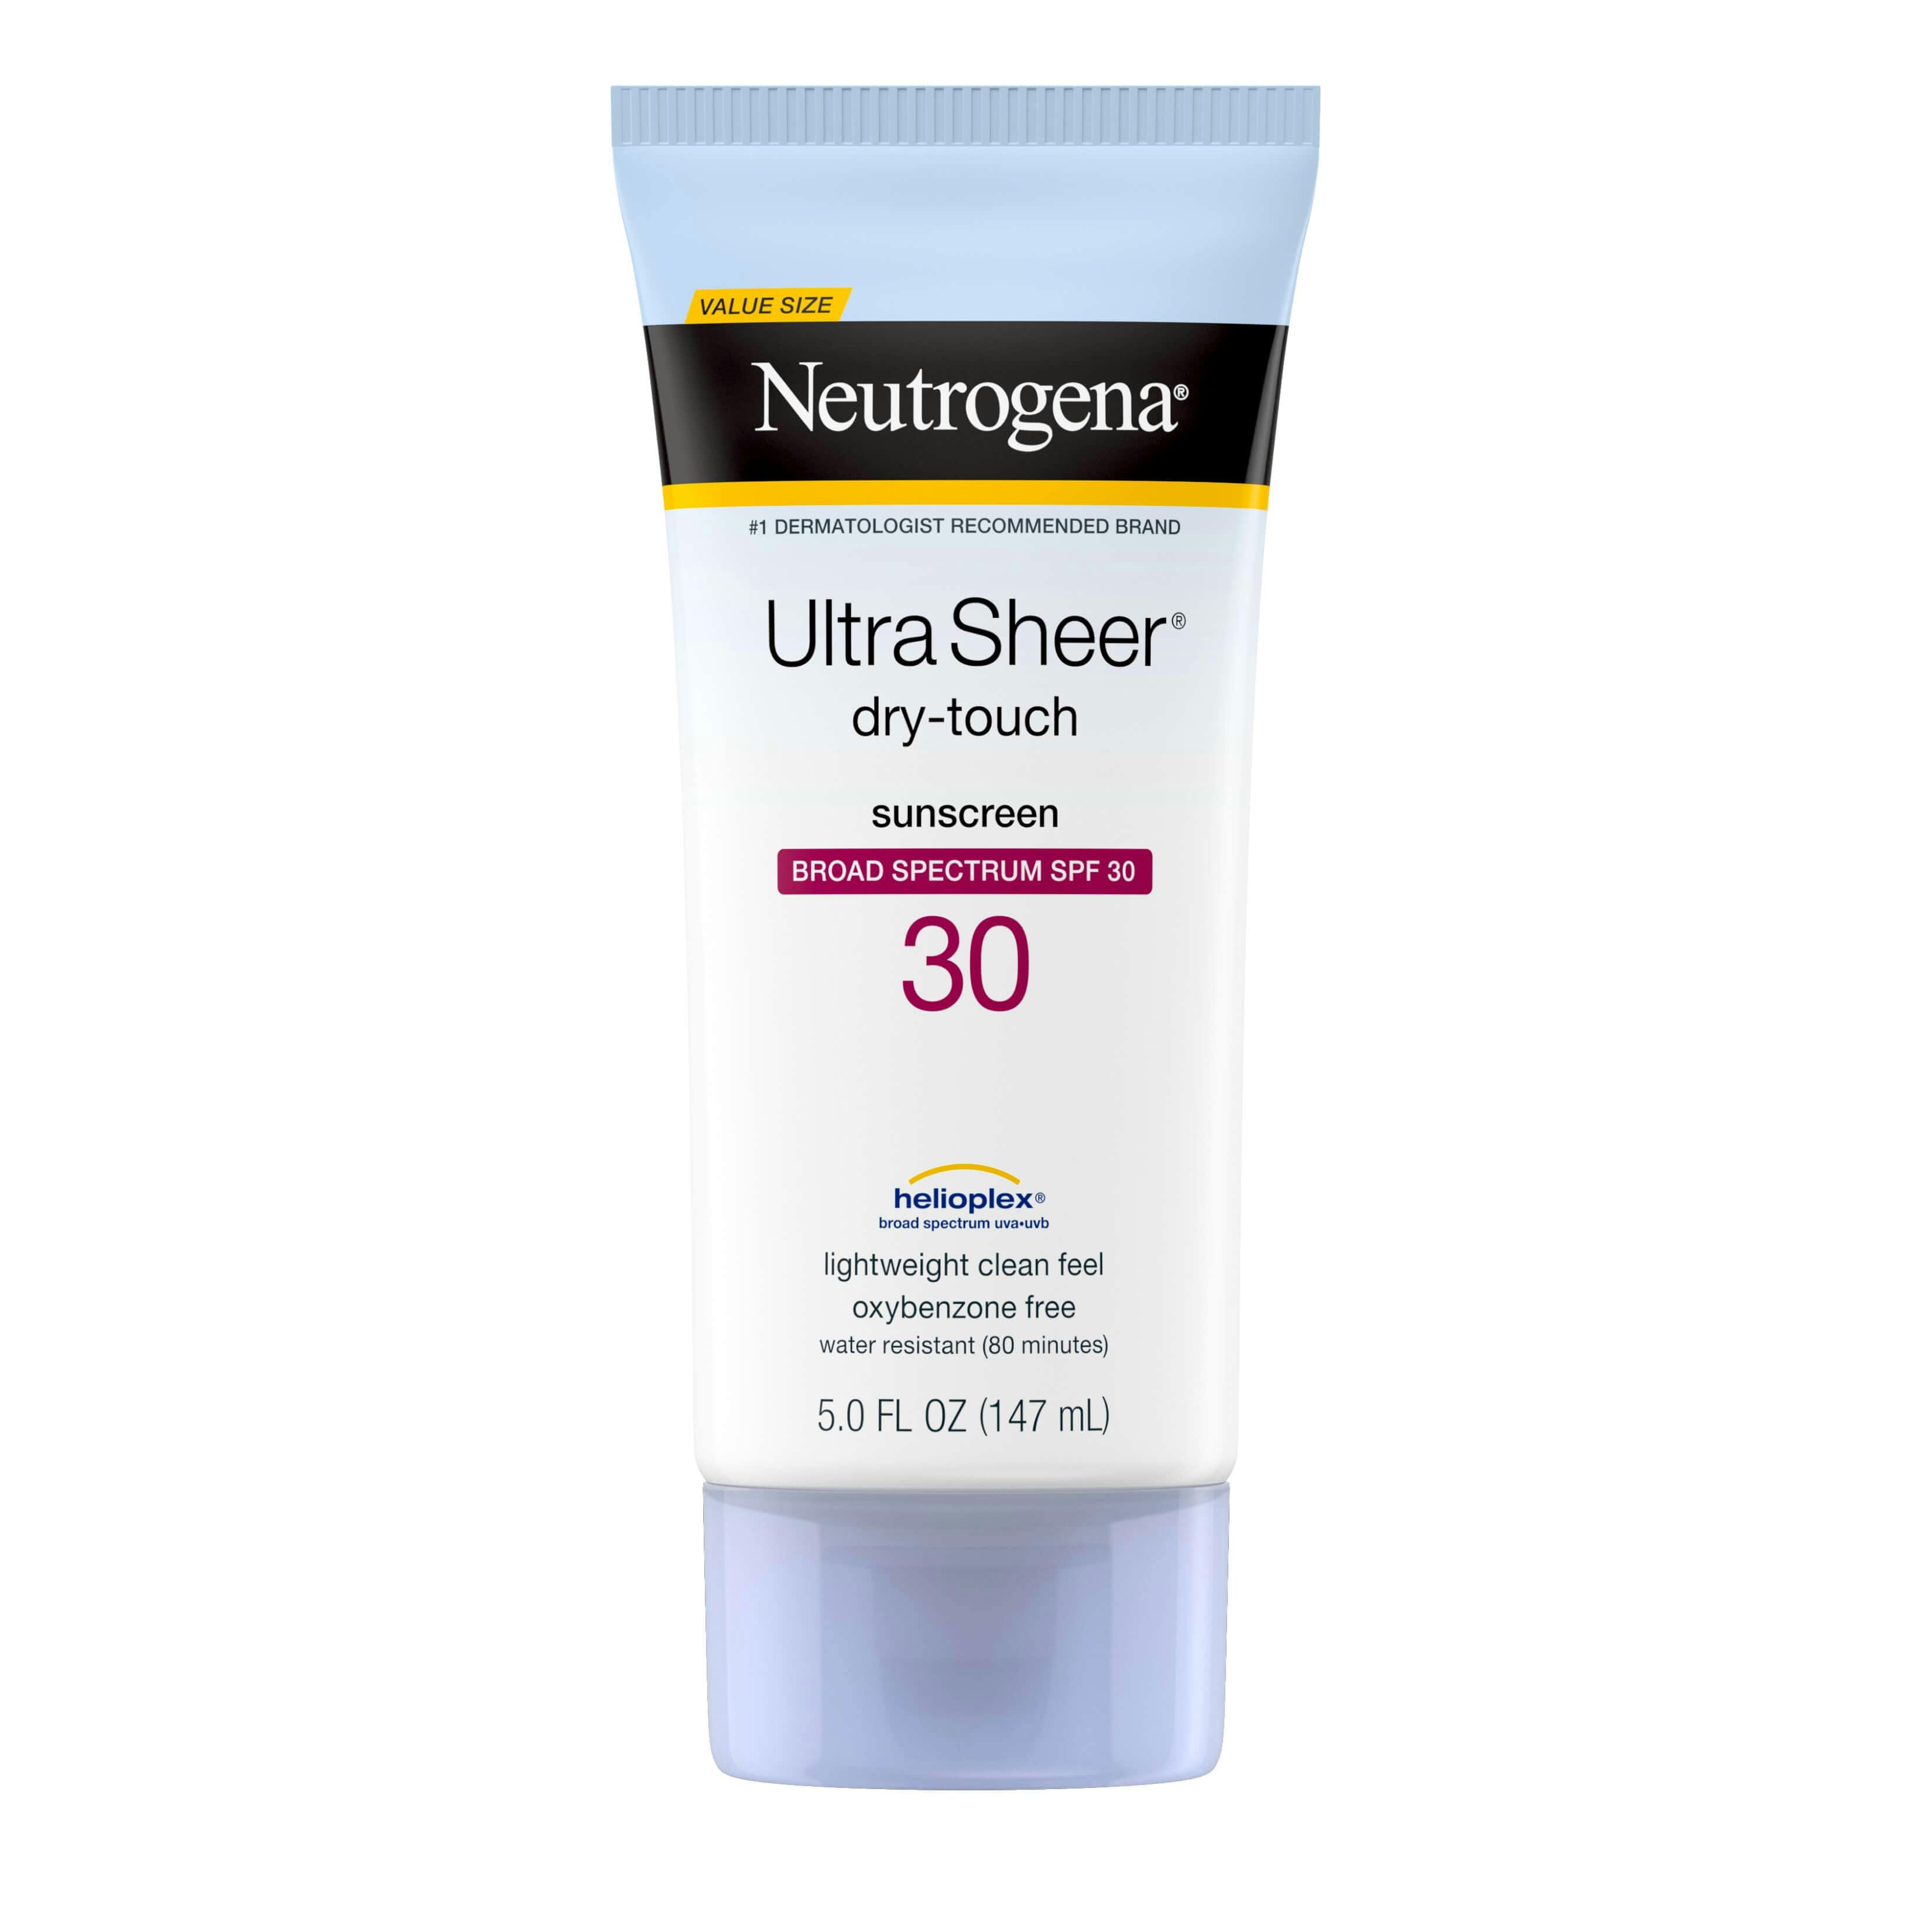 neutrogena sunscreen recall 2021